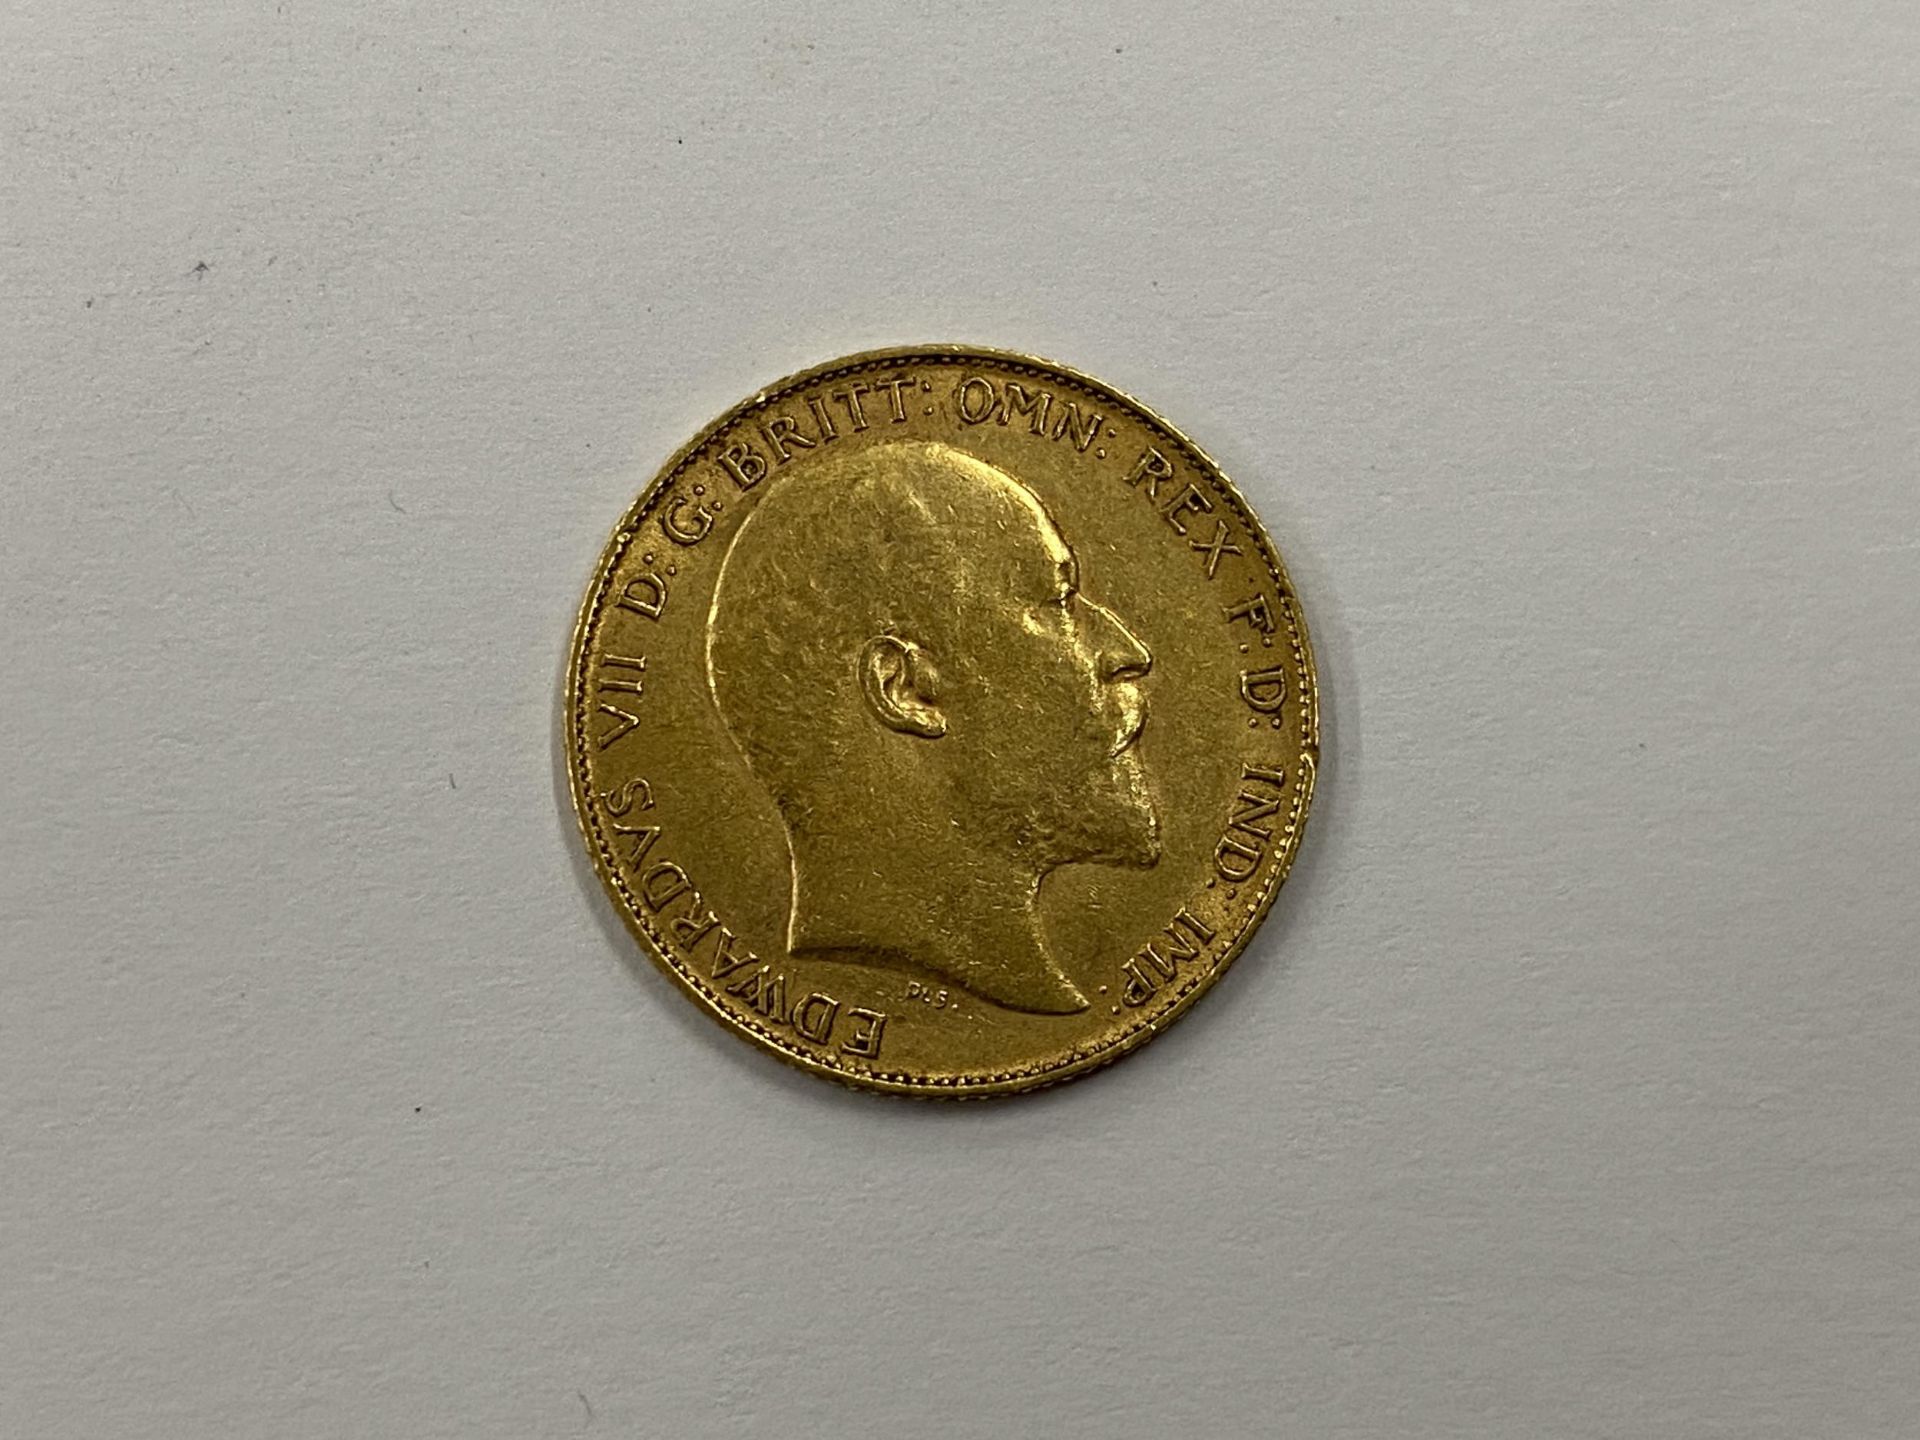 AN EDWARD VII 1910 GOLD HALF SOVEREIGN COIN - Image 2 of 2